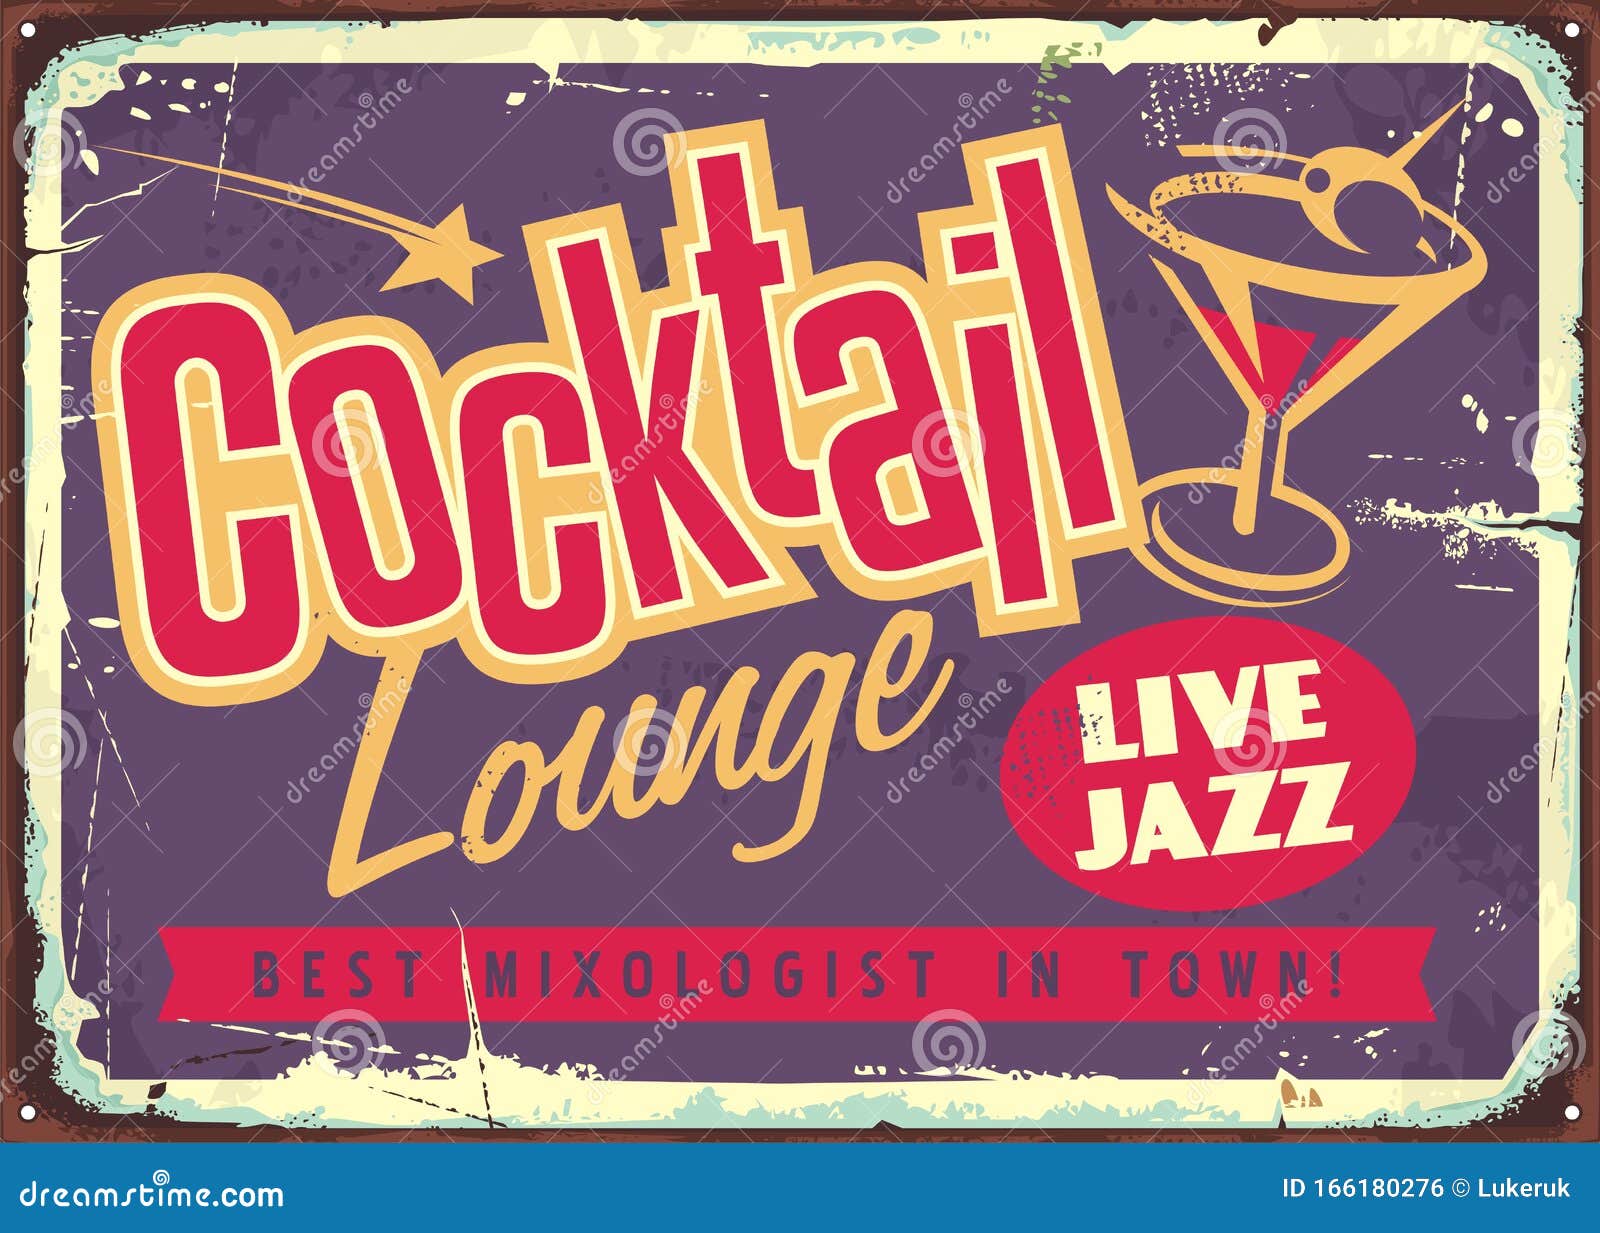 cocktail lounge live jazz vintage colorful sign